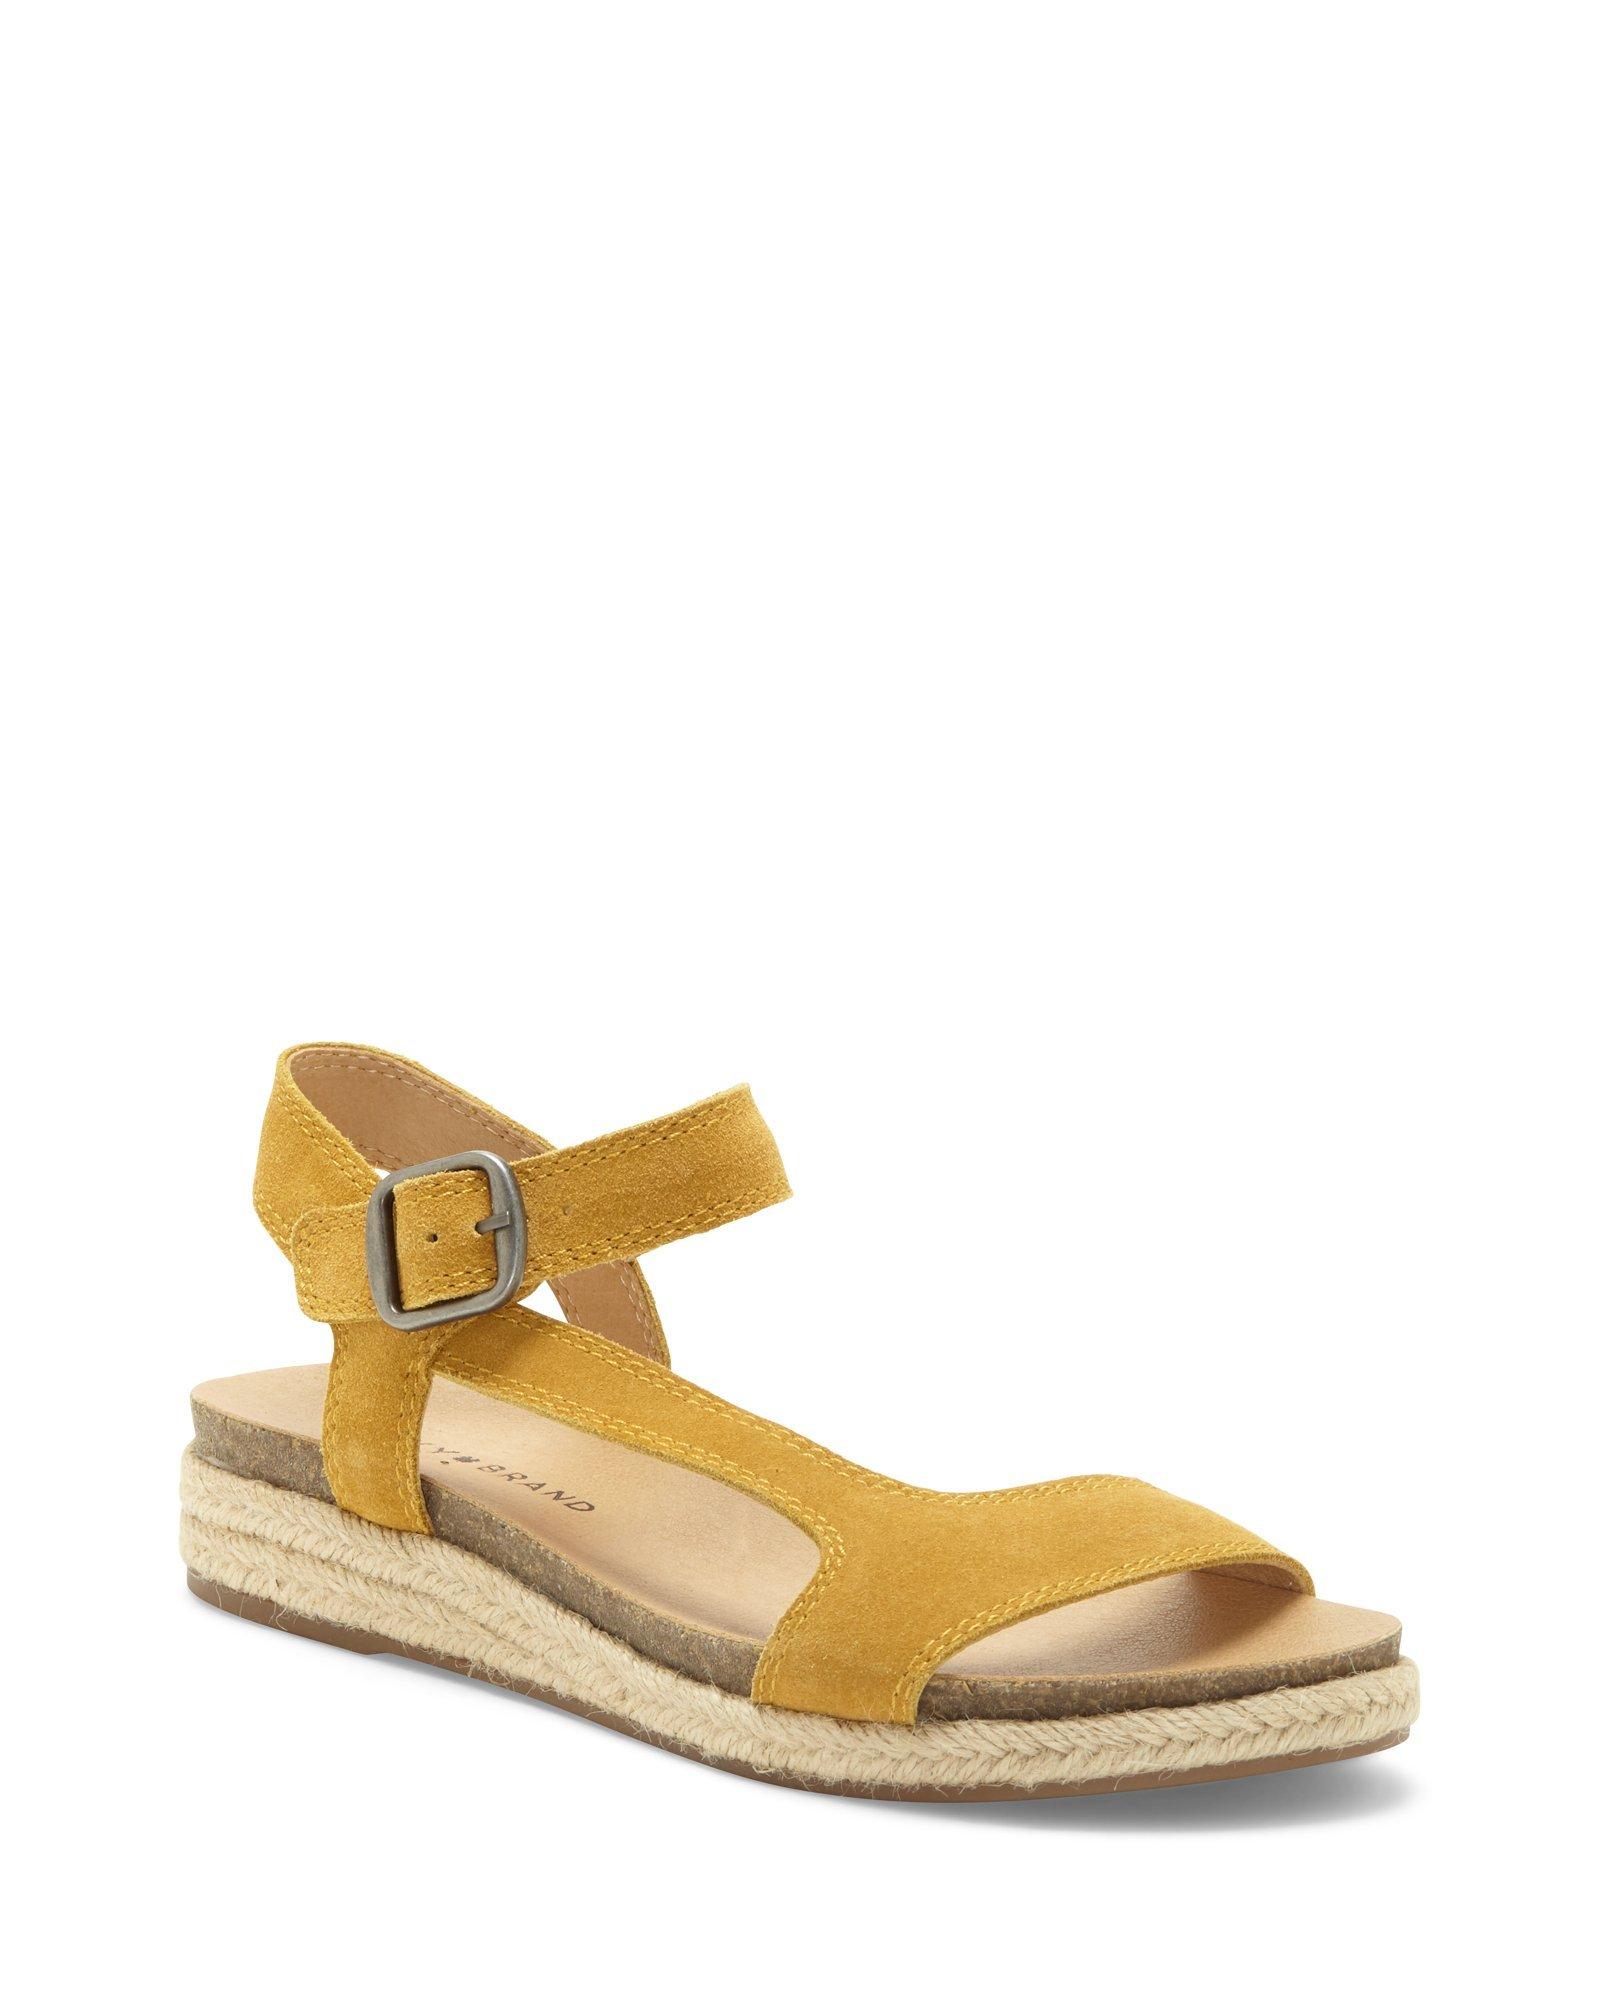 lucky brand yellow sandals